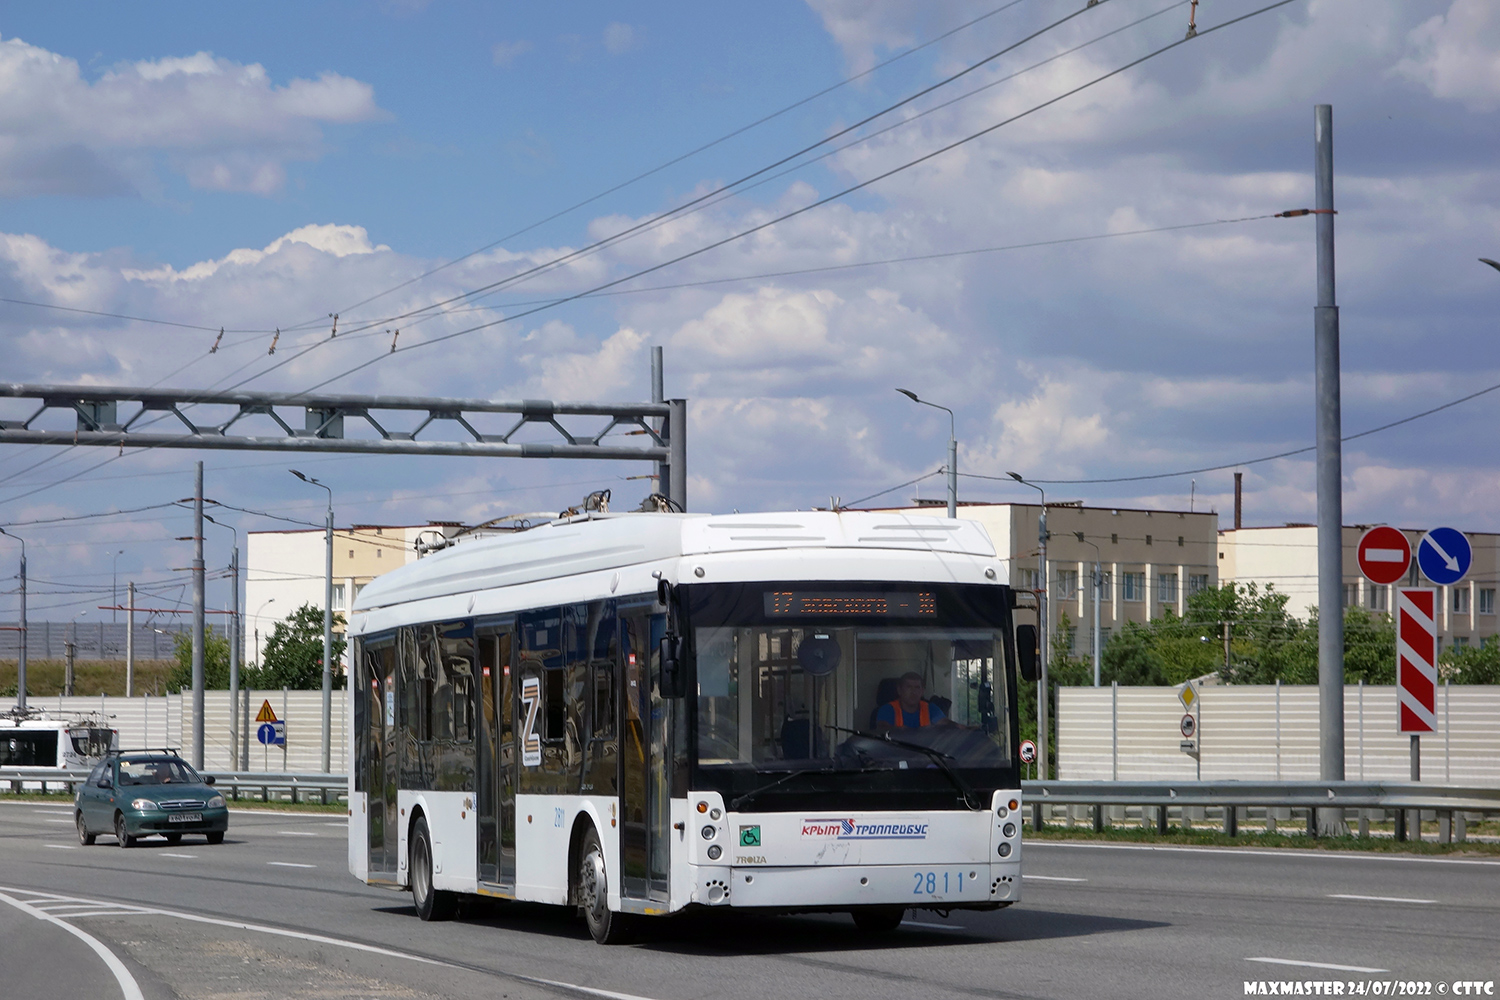 Krimski trolejbus, Trolza-5265.03 “Megapolis” č. 2811; Krimski trolejbus — The movement of trolleybuses without CS (autonomous running).